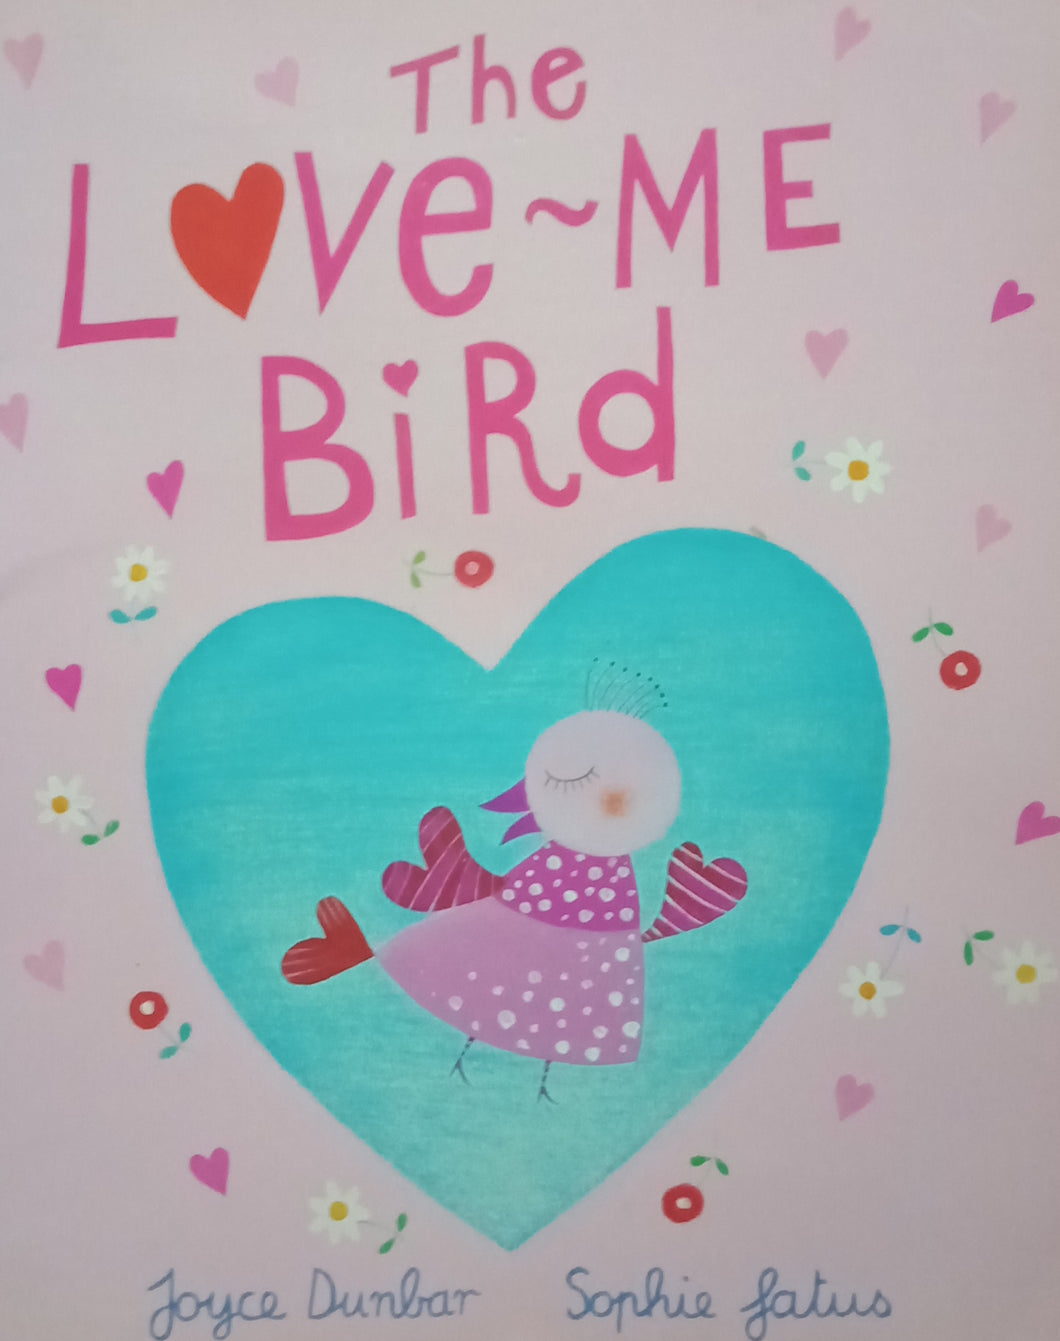 The Love-Me Bird by Joyce Dunbar